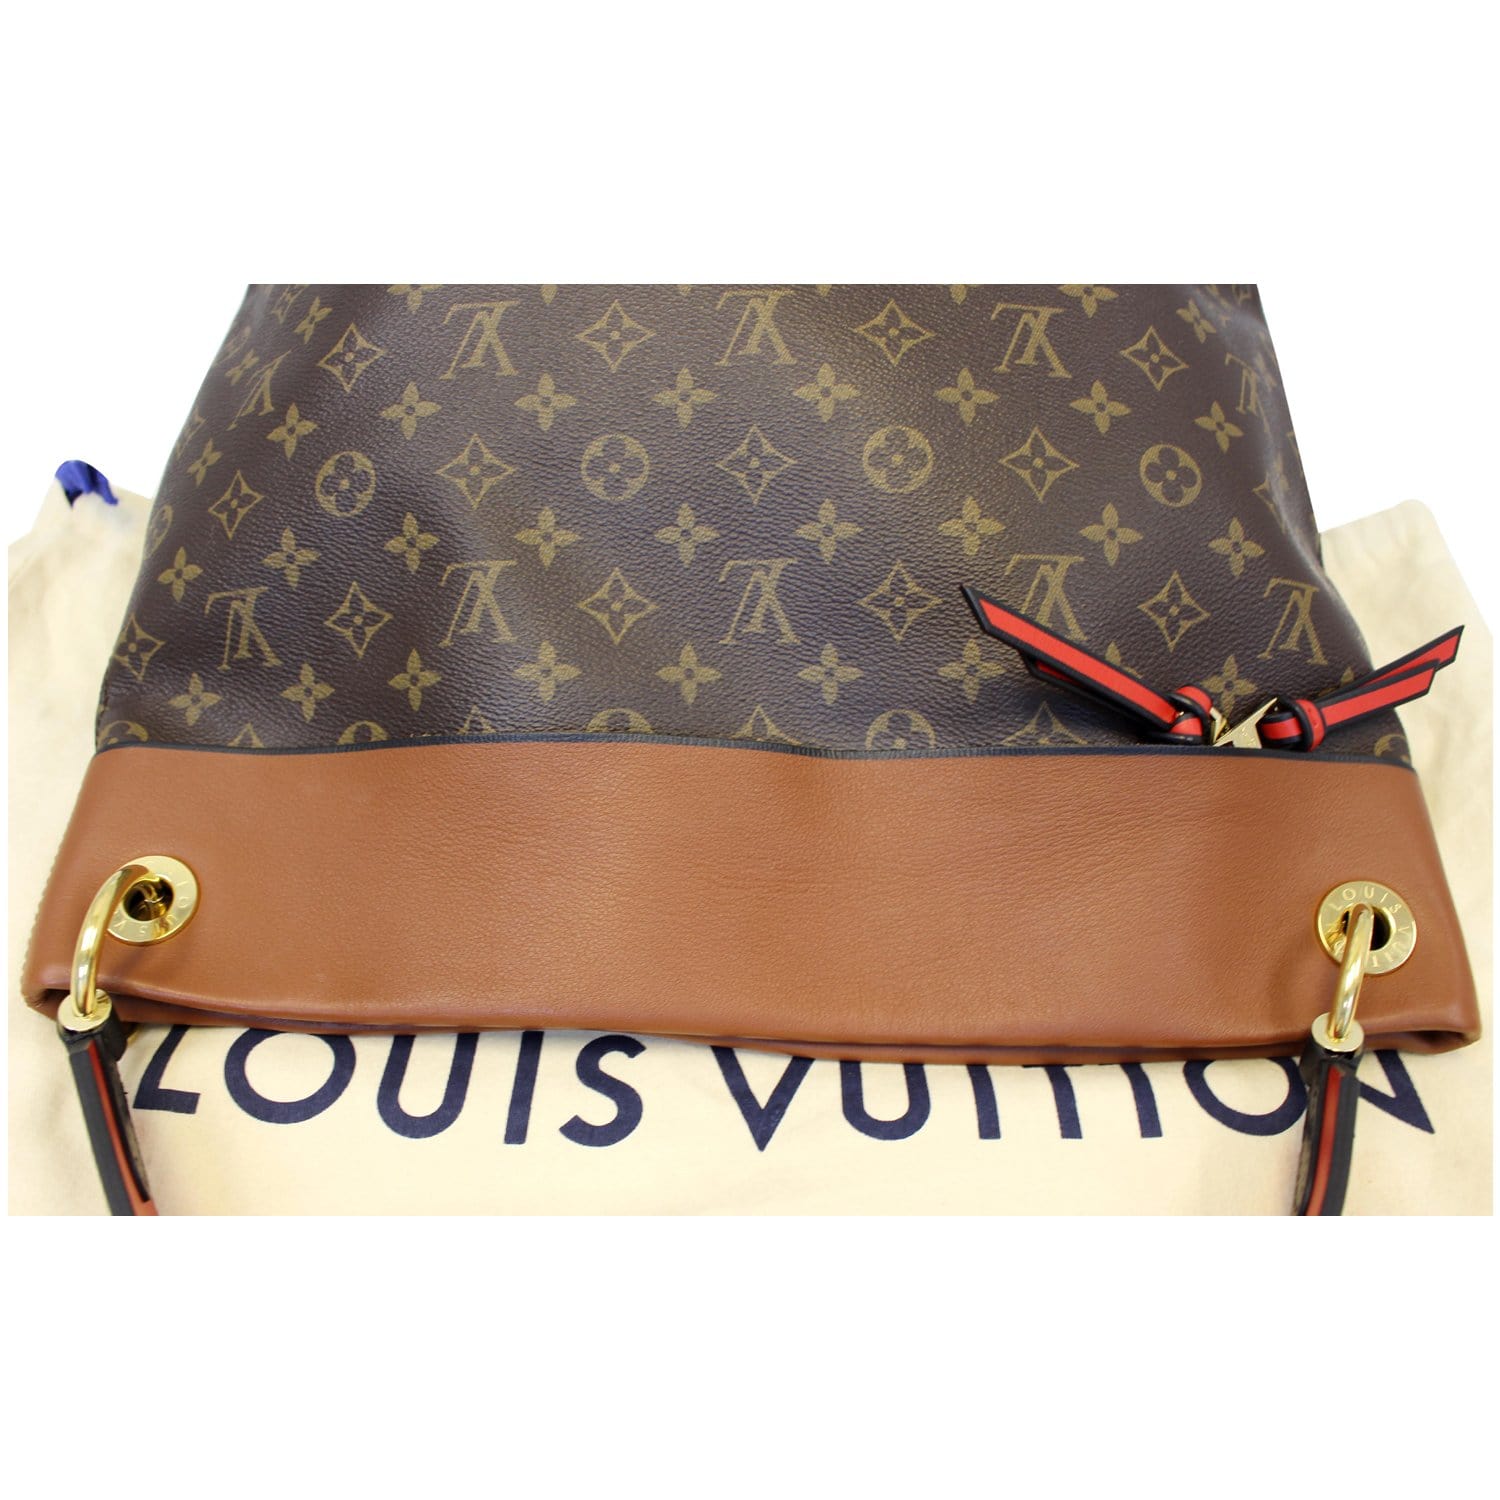 LOUIS VUITTON Tuileries Monogram Canvas Clutch Bag Caramel - 15% OFF